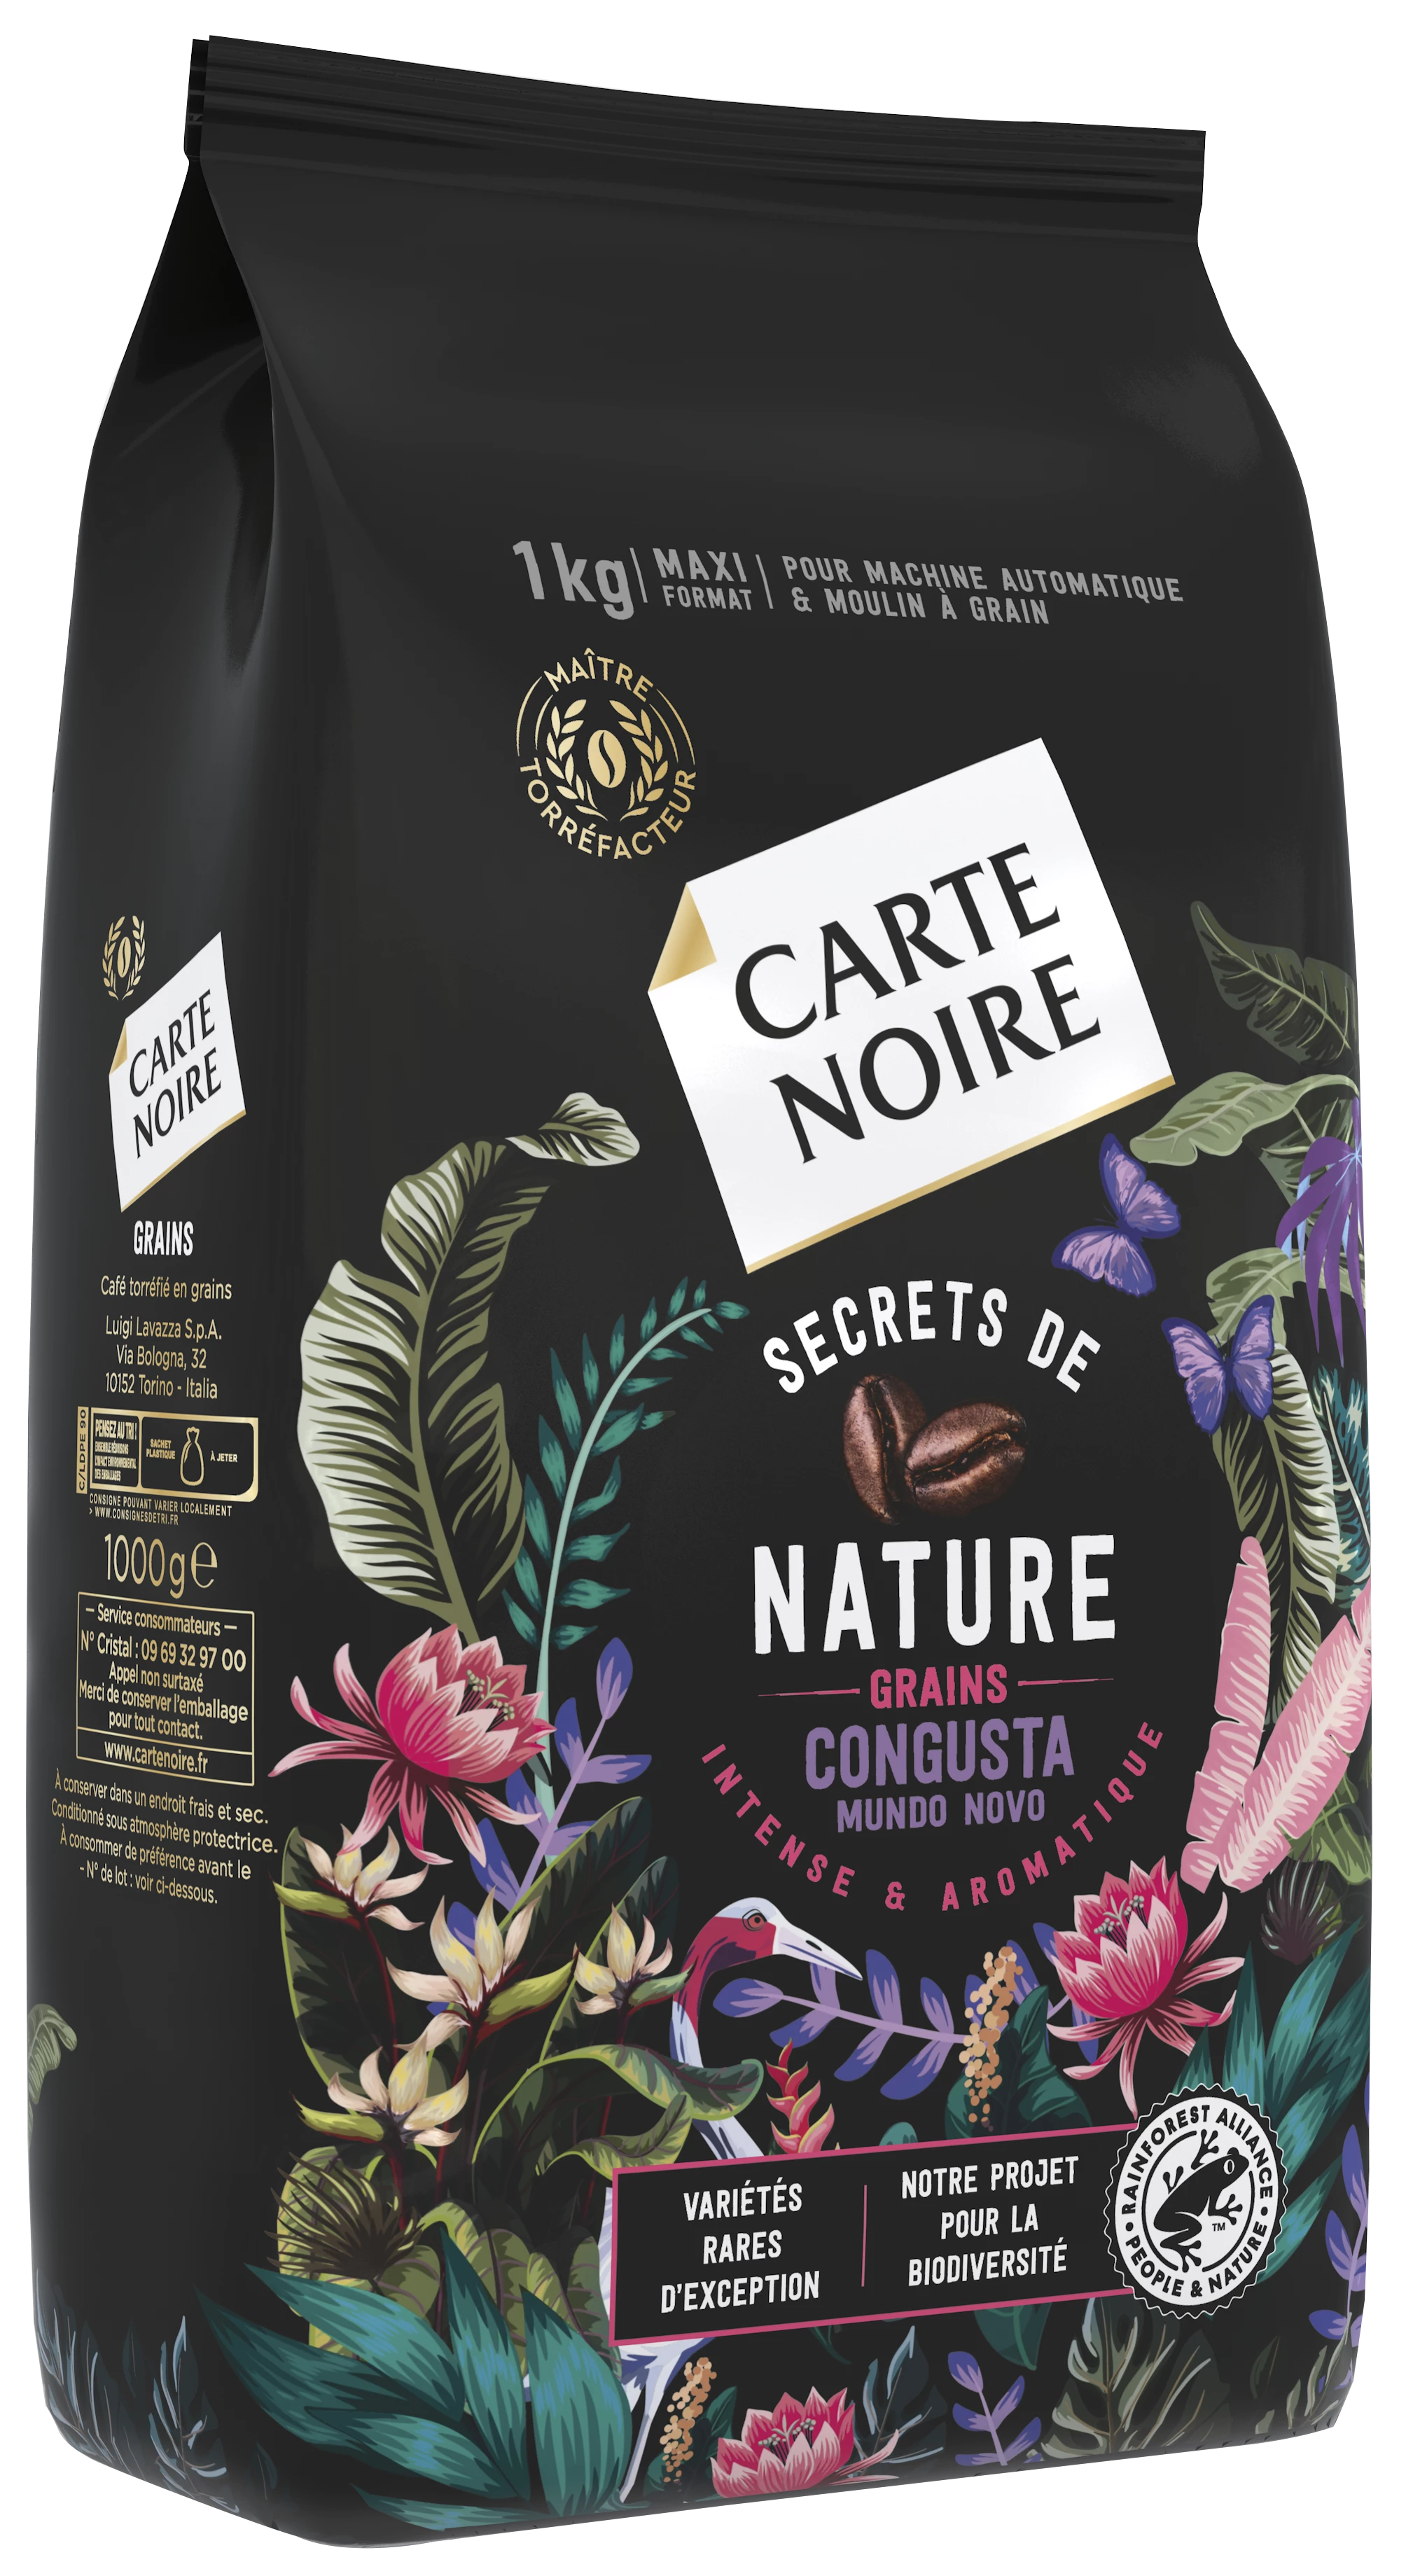 Grãos de café Congusta Intense & Aromatic; Saco de 1kg - CARTE NOIRE